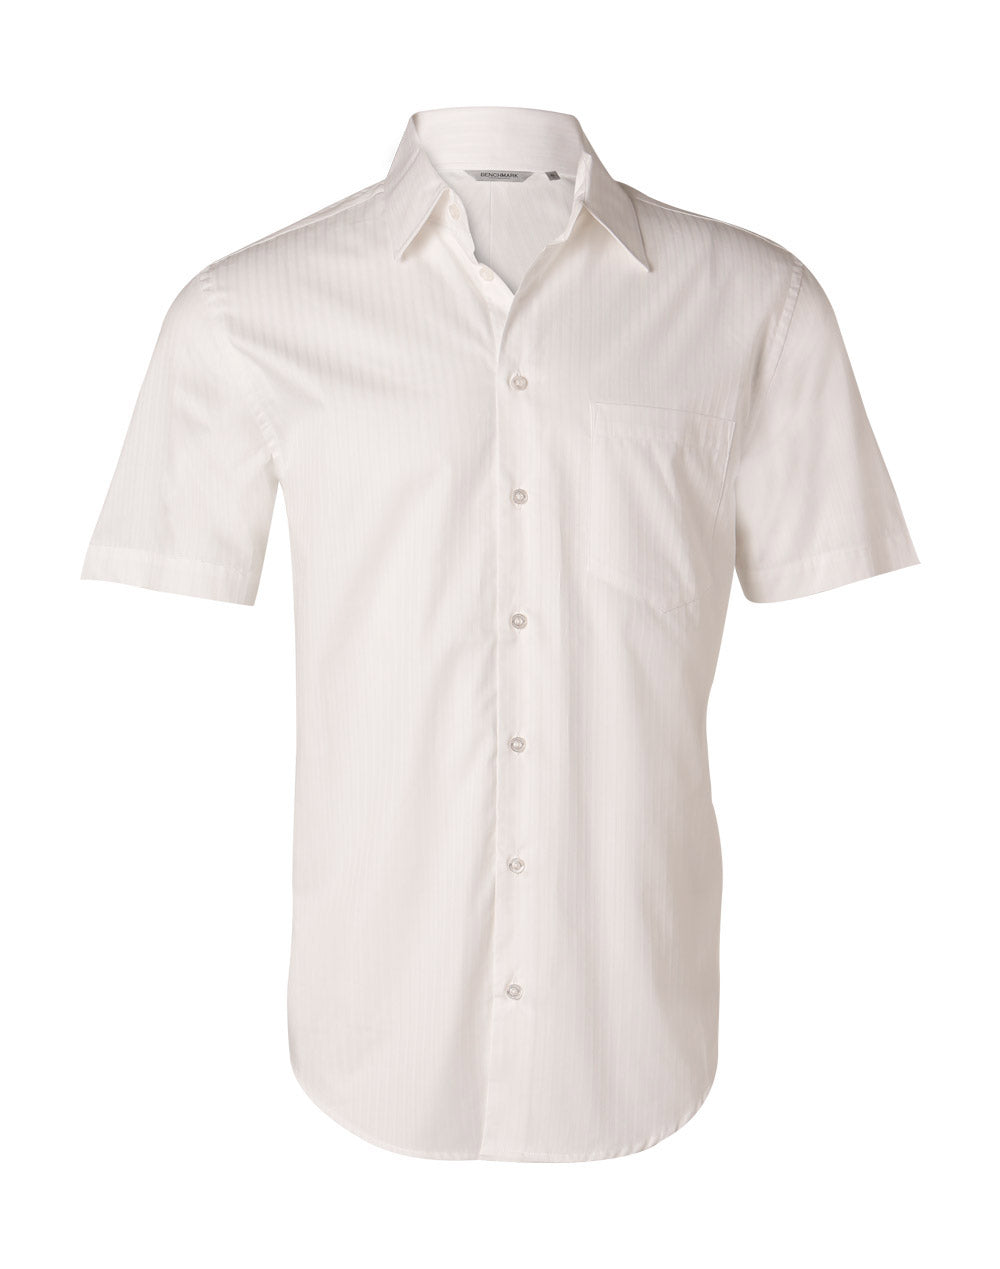 Winning Spirit-Men's Self Stripe Short Sleeve Shirt-M7100S